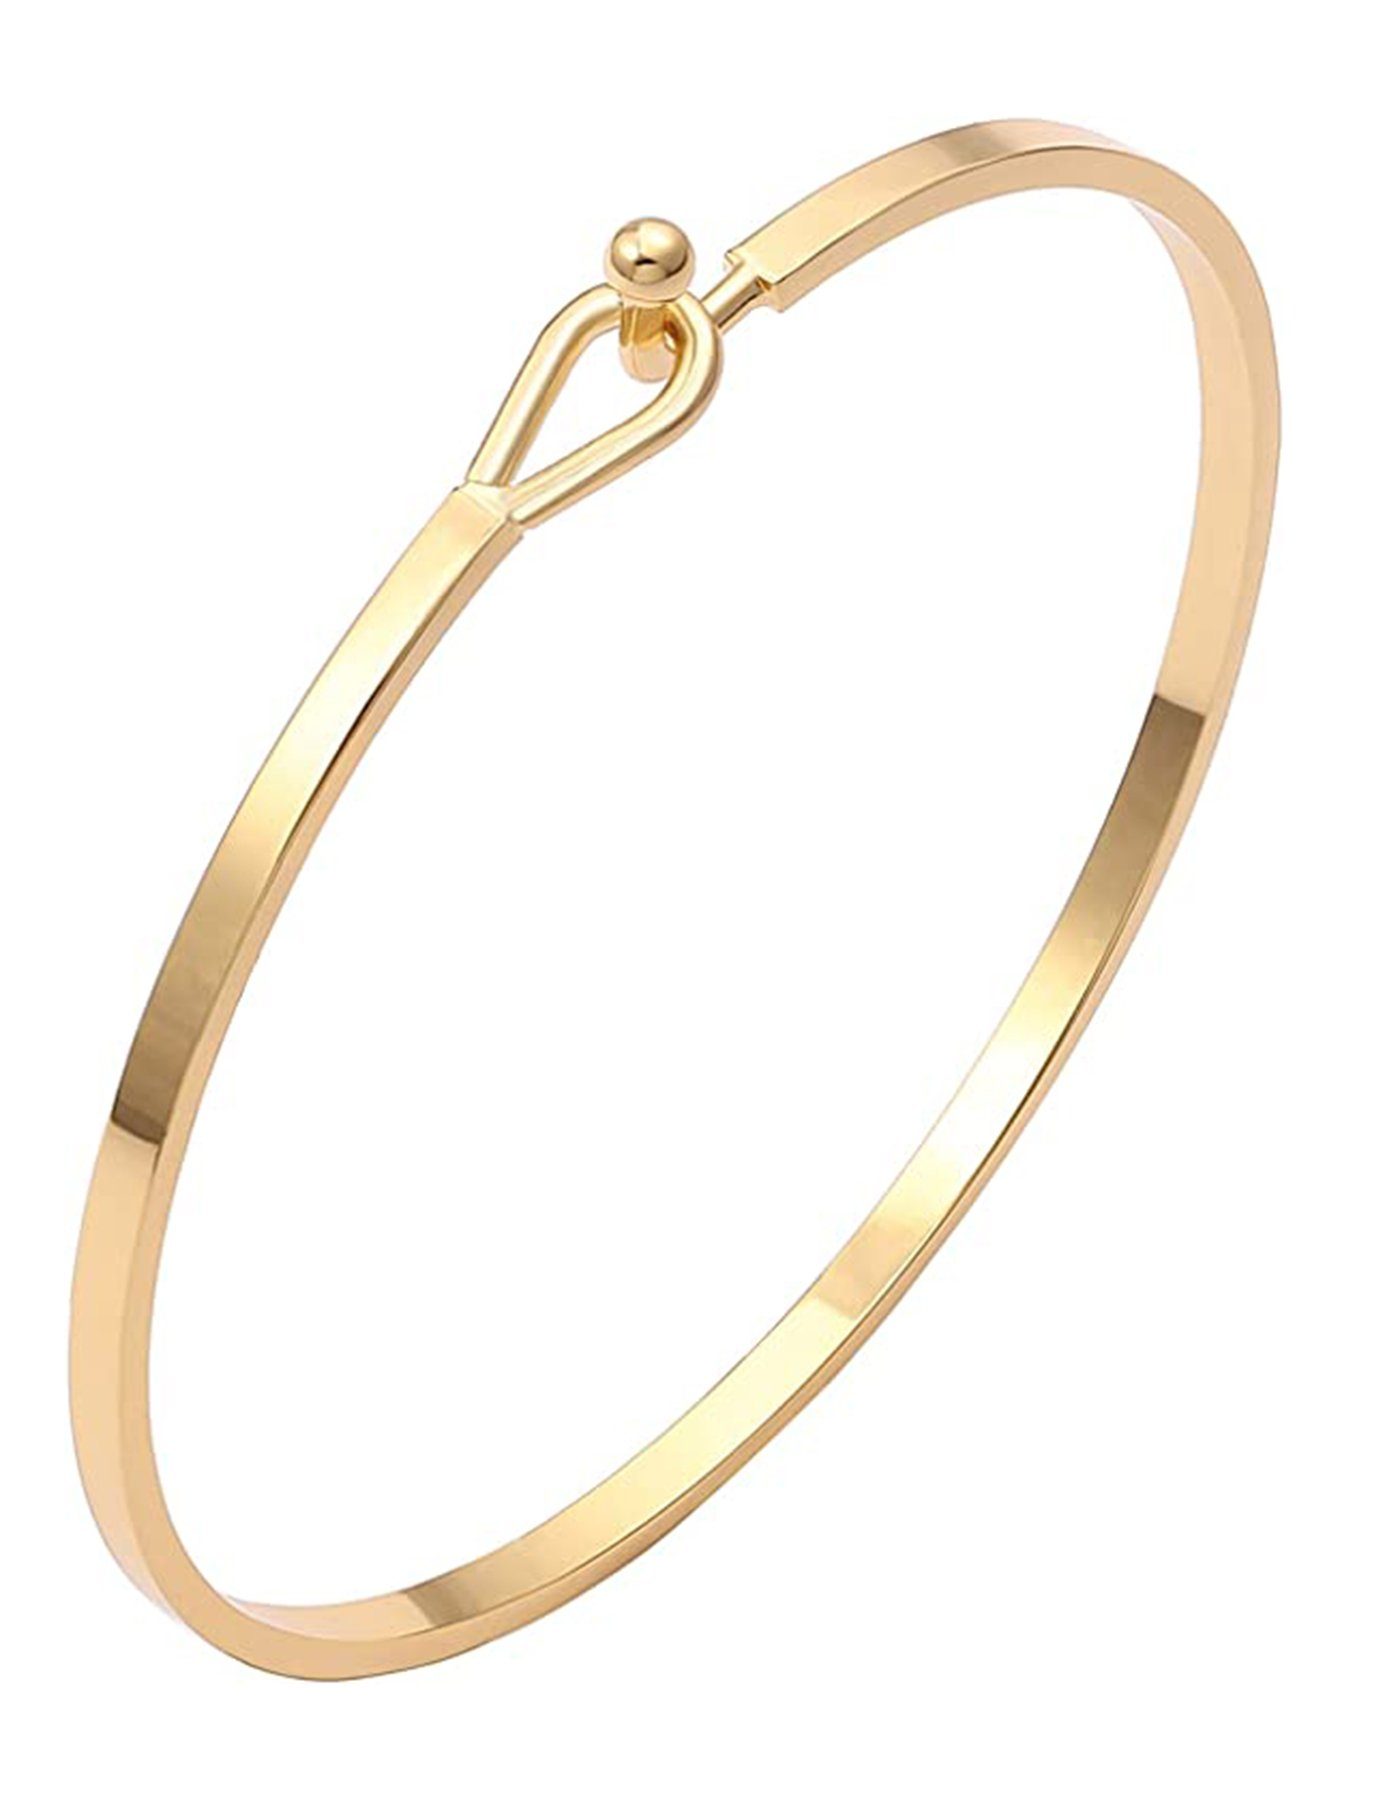 Armkette Gold, Haken Handgefertigten Haiaveng Armband Bar Schmuck,Dainty dünne Armband Manschette Gold minimalistischen Einfache Armreif zarte